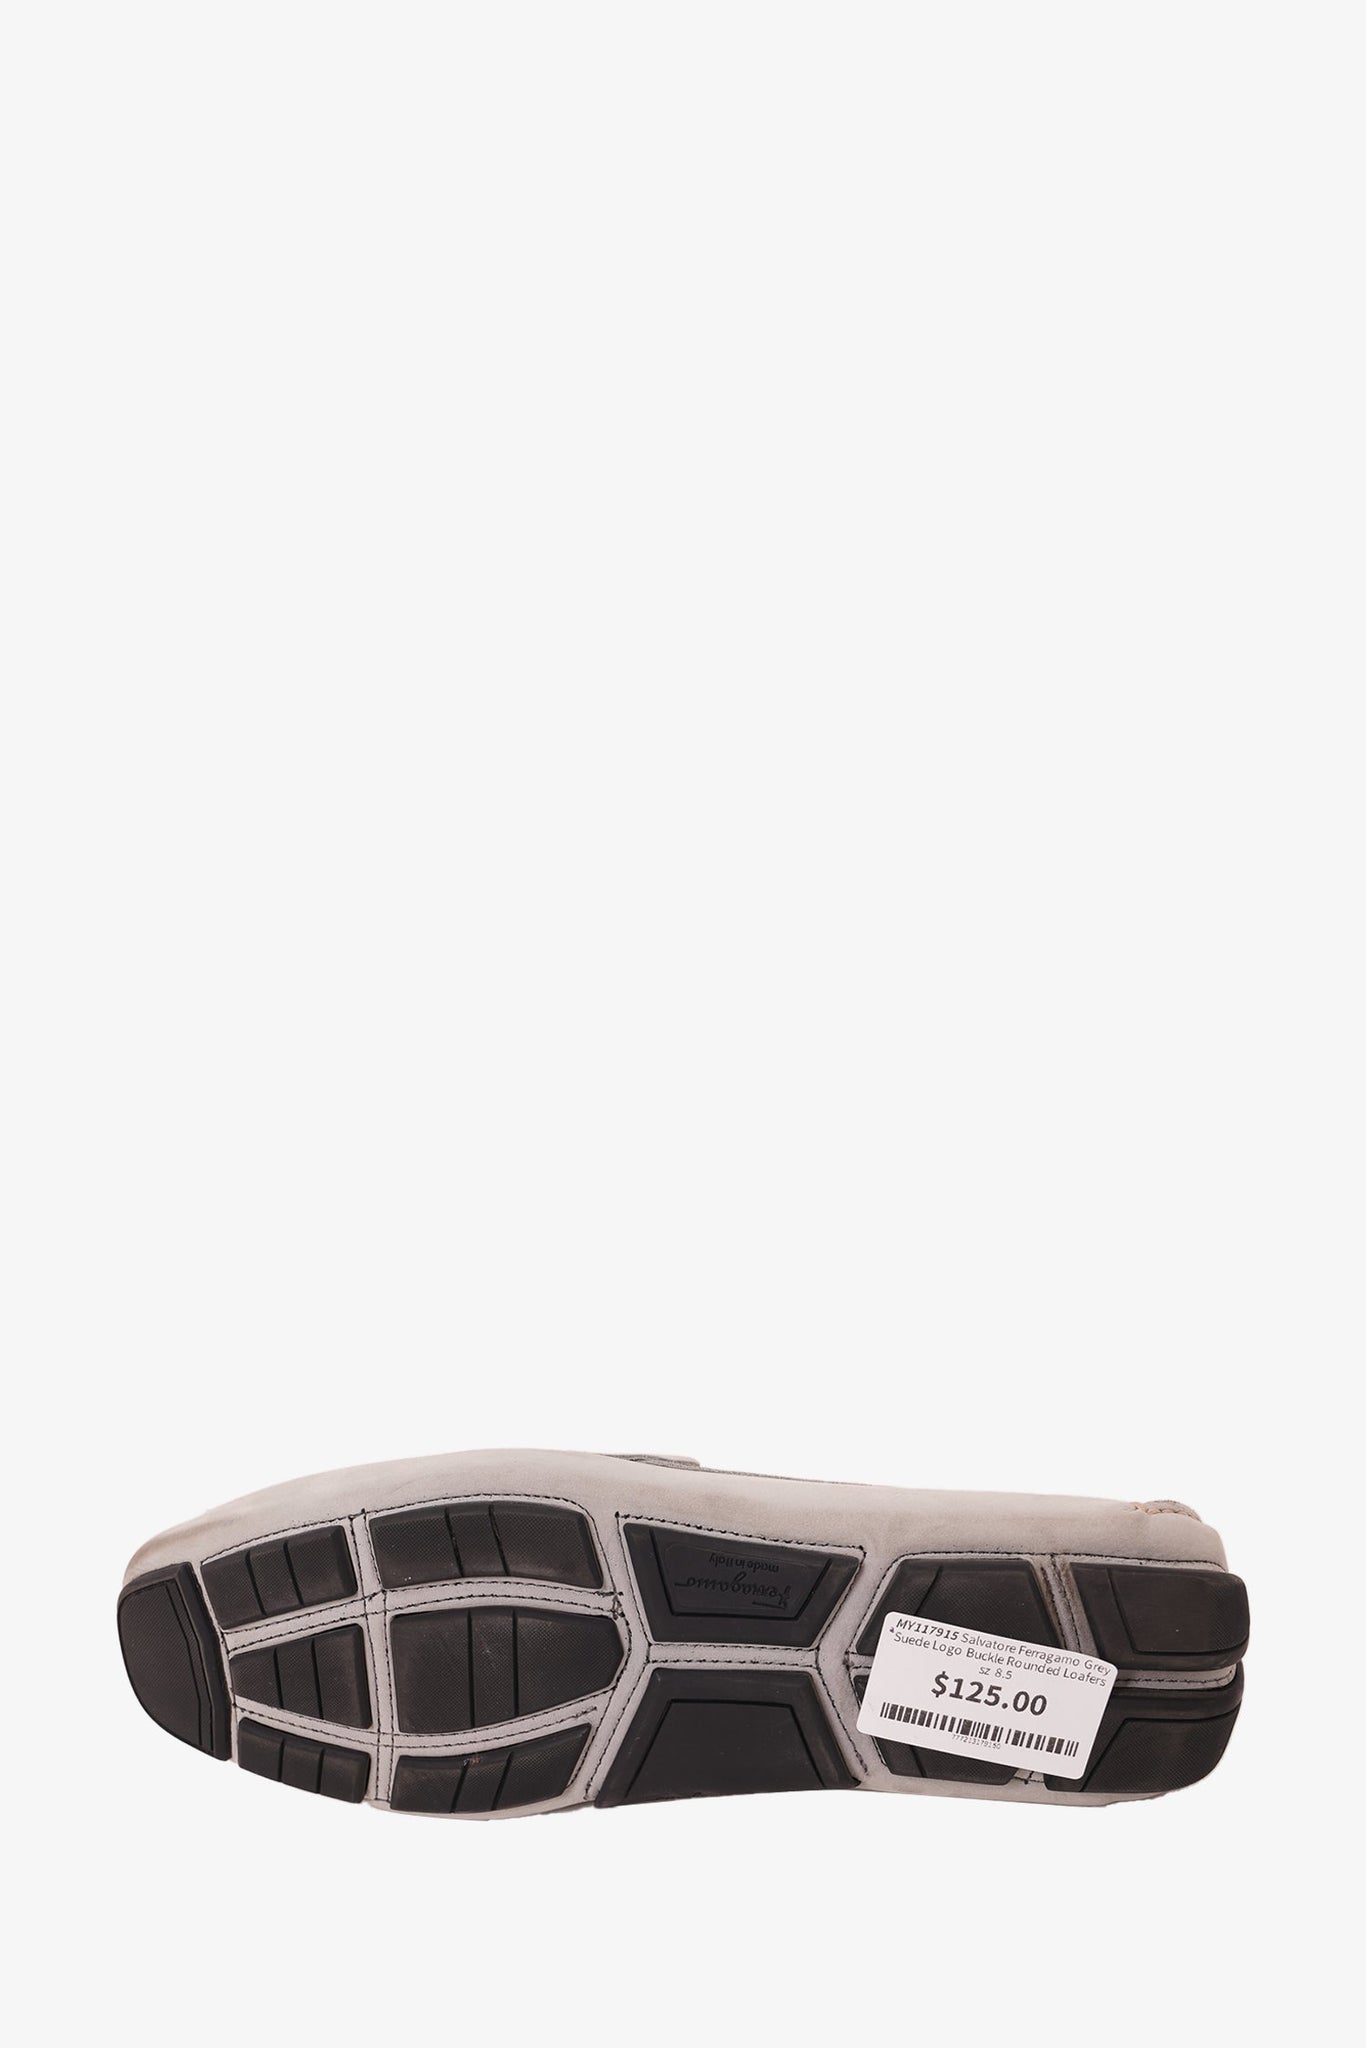 Salvatore Ferragamo Grey Suede Logo Buckle Rounded Loafers sz 8.5 Men's